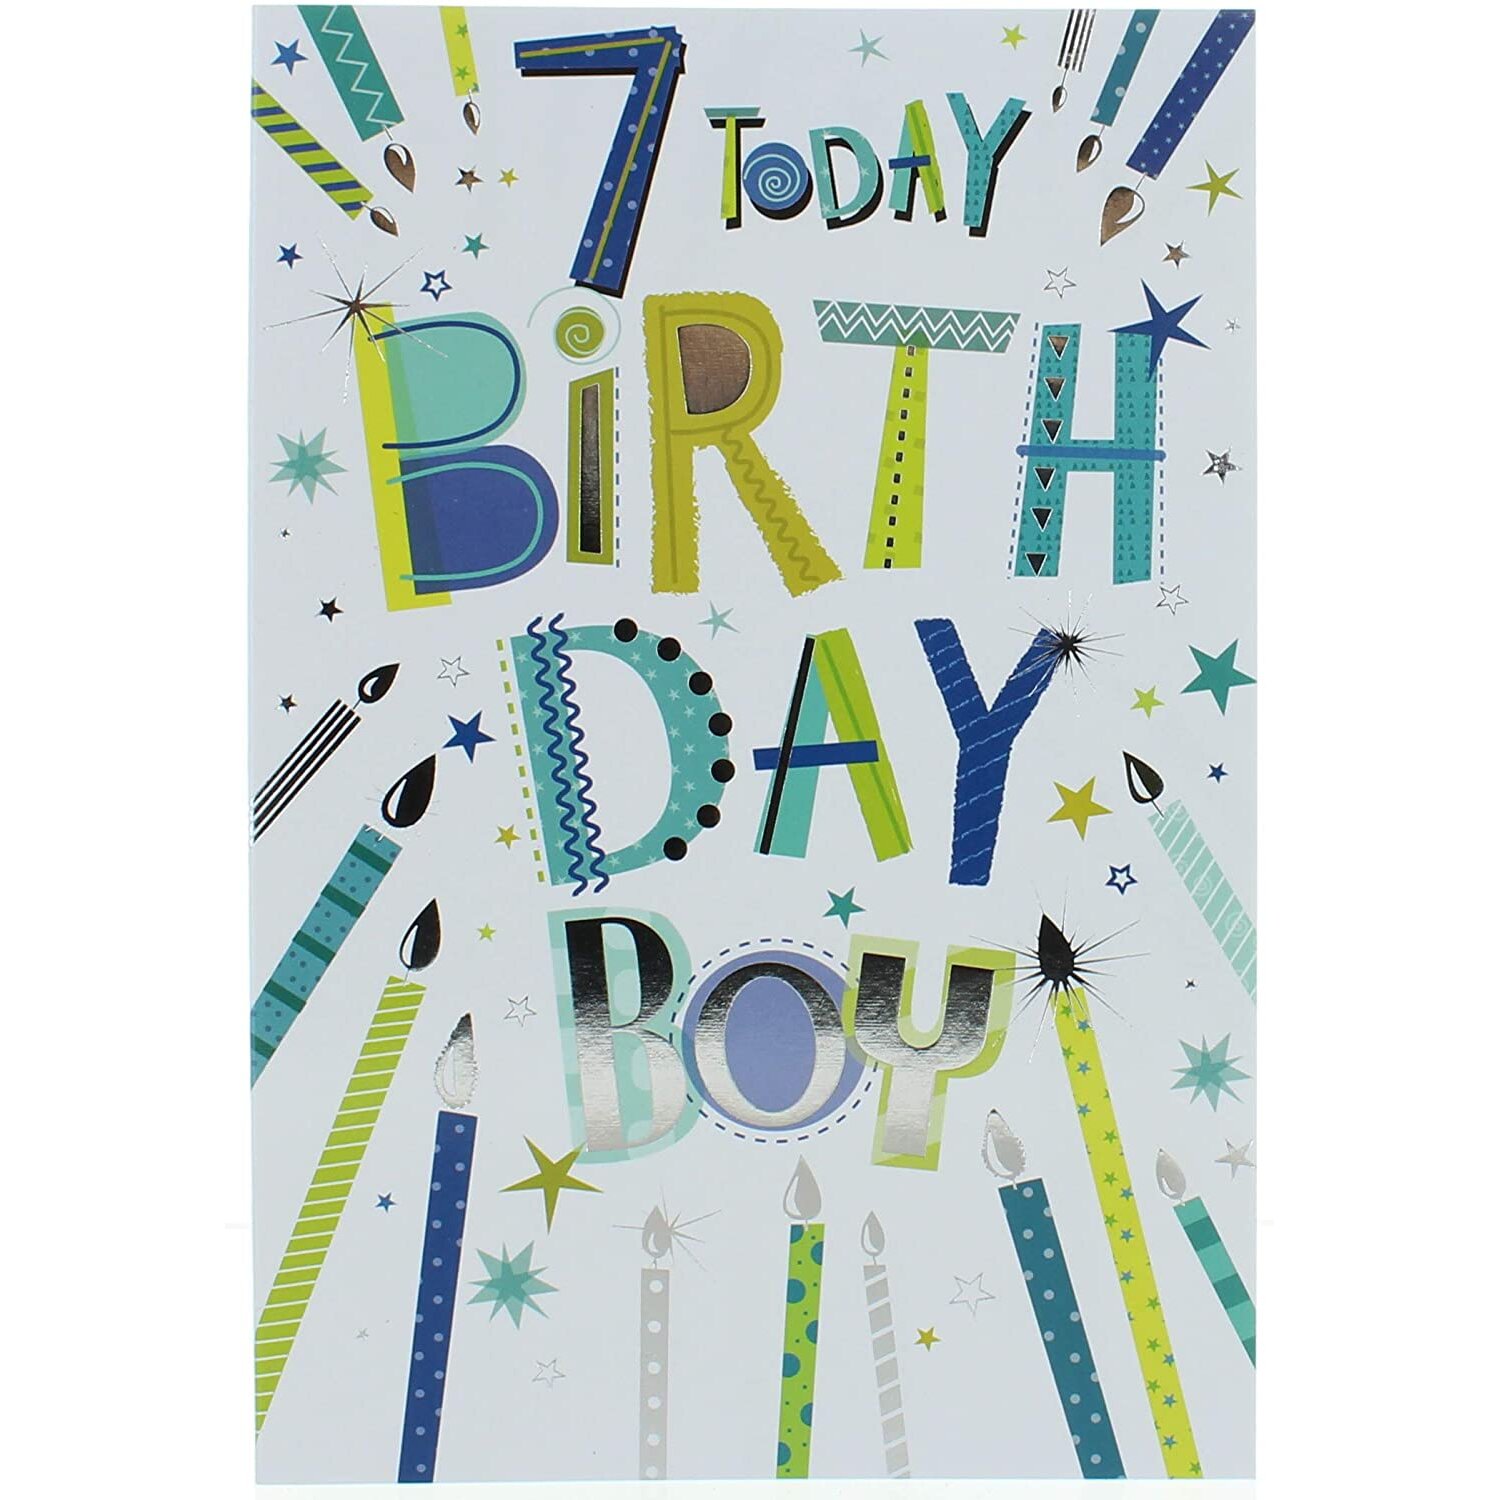 Age 7 Boy Birthday Card - Blue & Green Candles & Writing Silver Foil 7.75"x5.25"